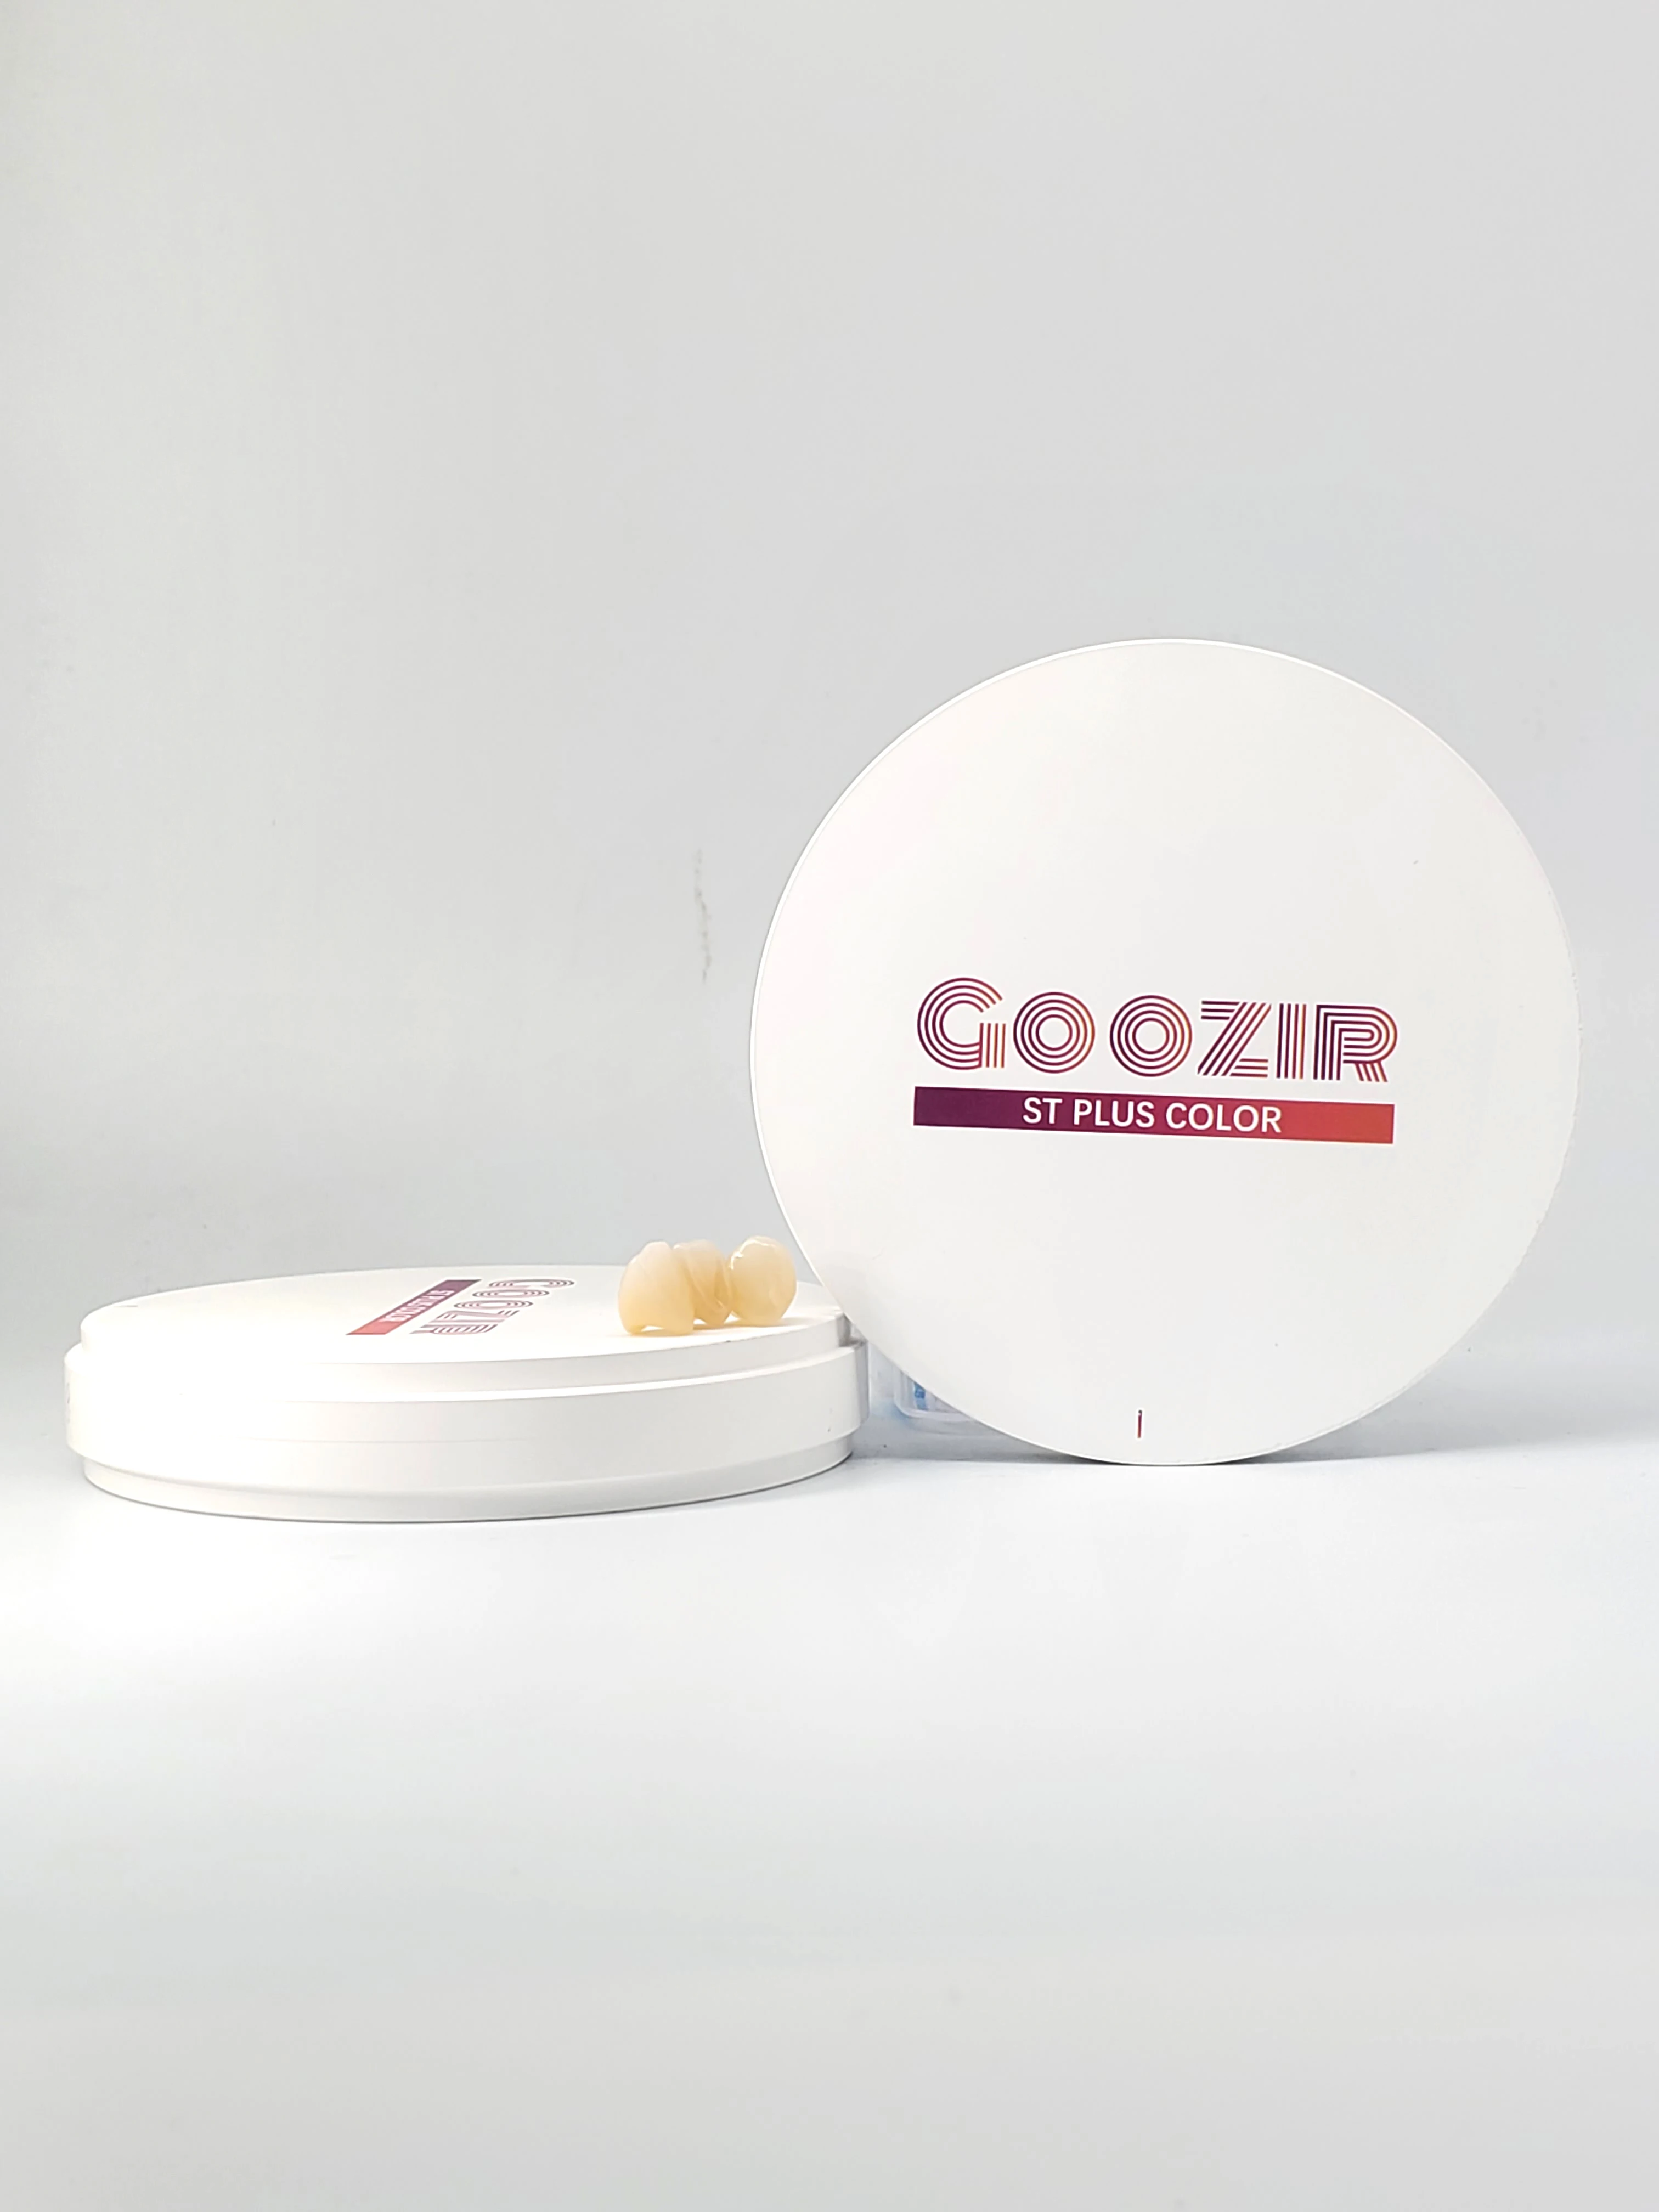 Best Selling Preshaded Zirconia Blocks 98*20mm VITA16 COLORS Zirconia Ceramic Dental for Open System